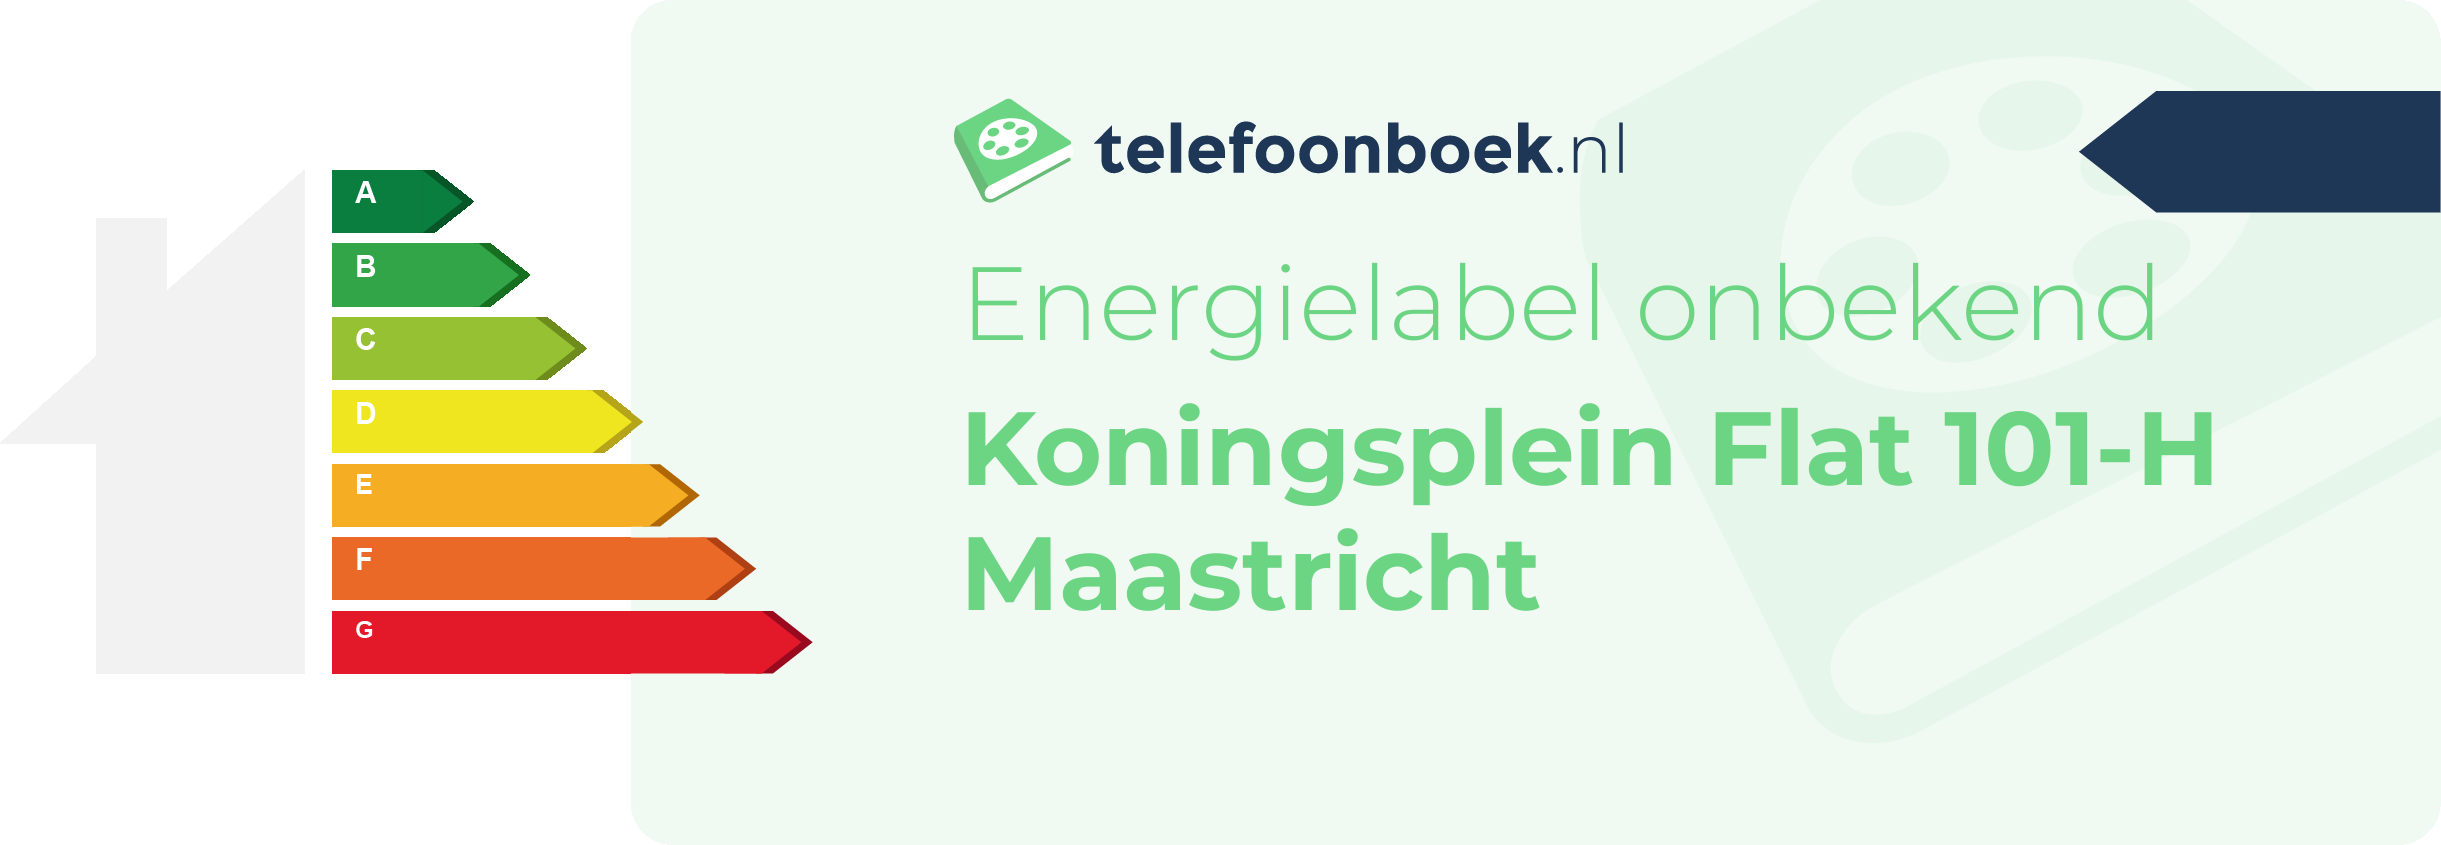 Energielabel Koningsplein Flat 101-H Maastricht